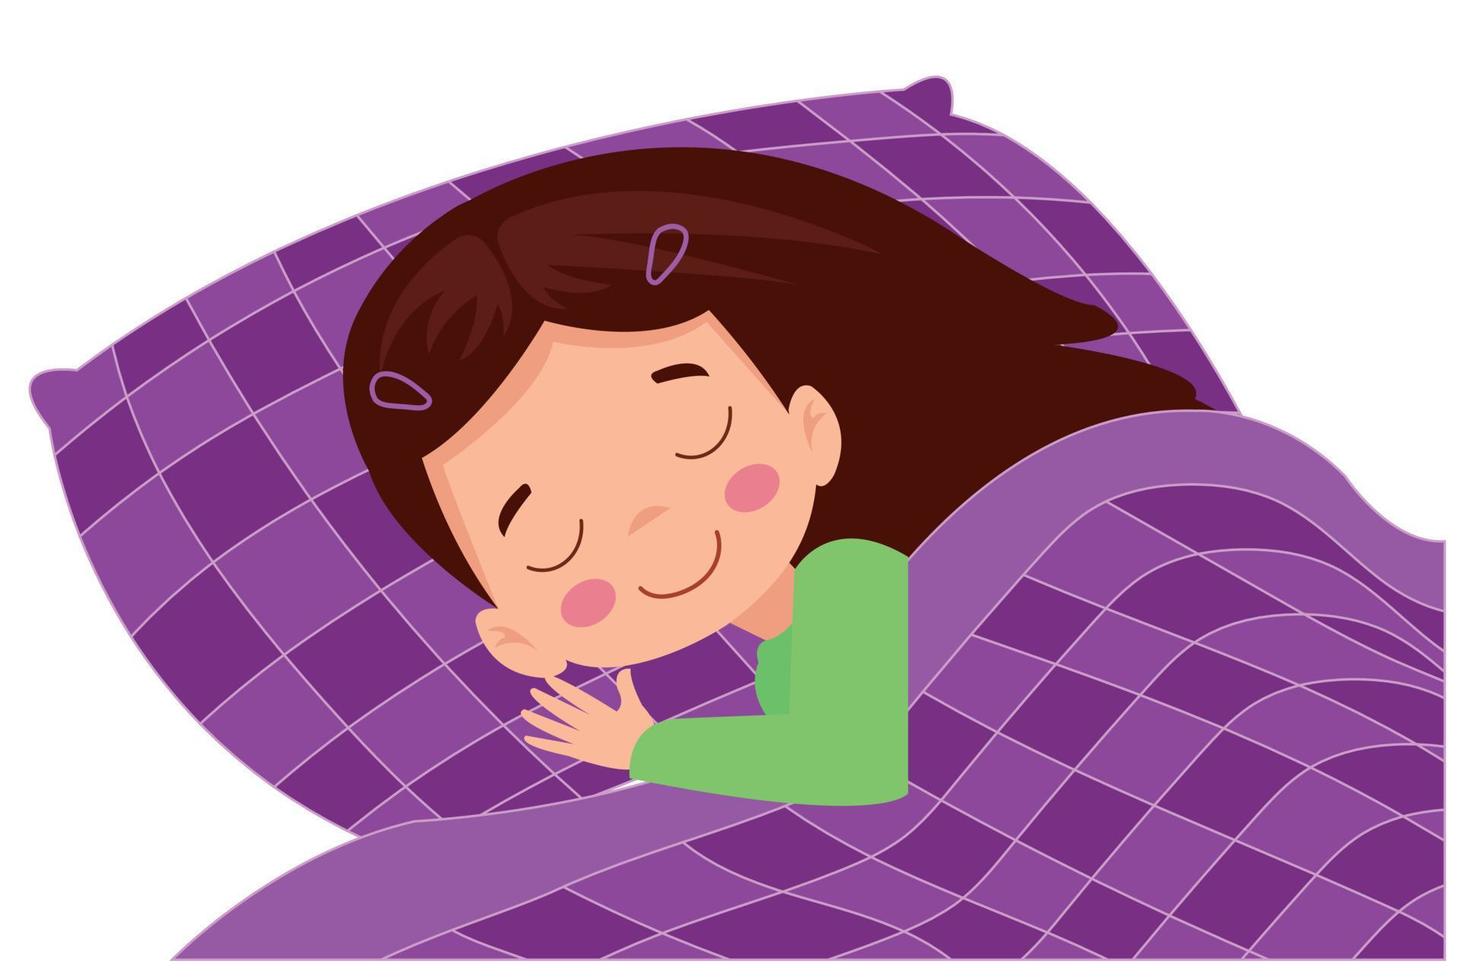 süßes Cartoon-Mädchen in einem Bett vektor